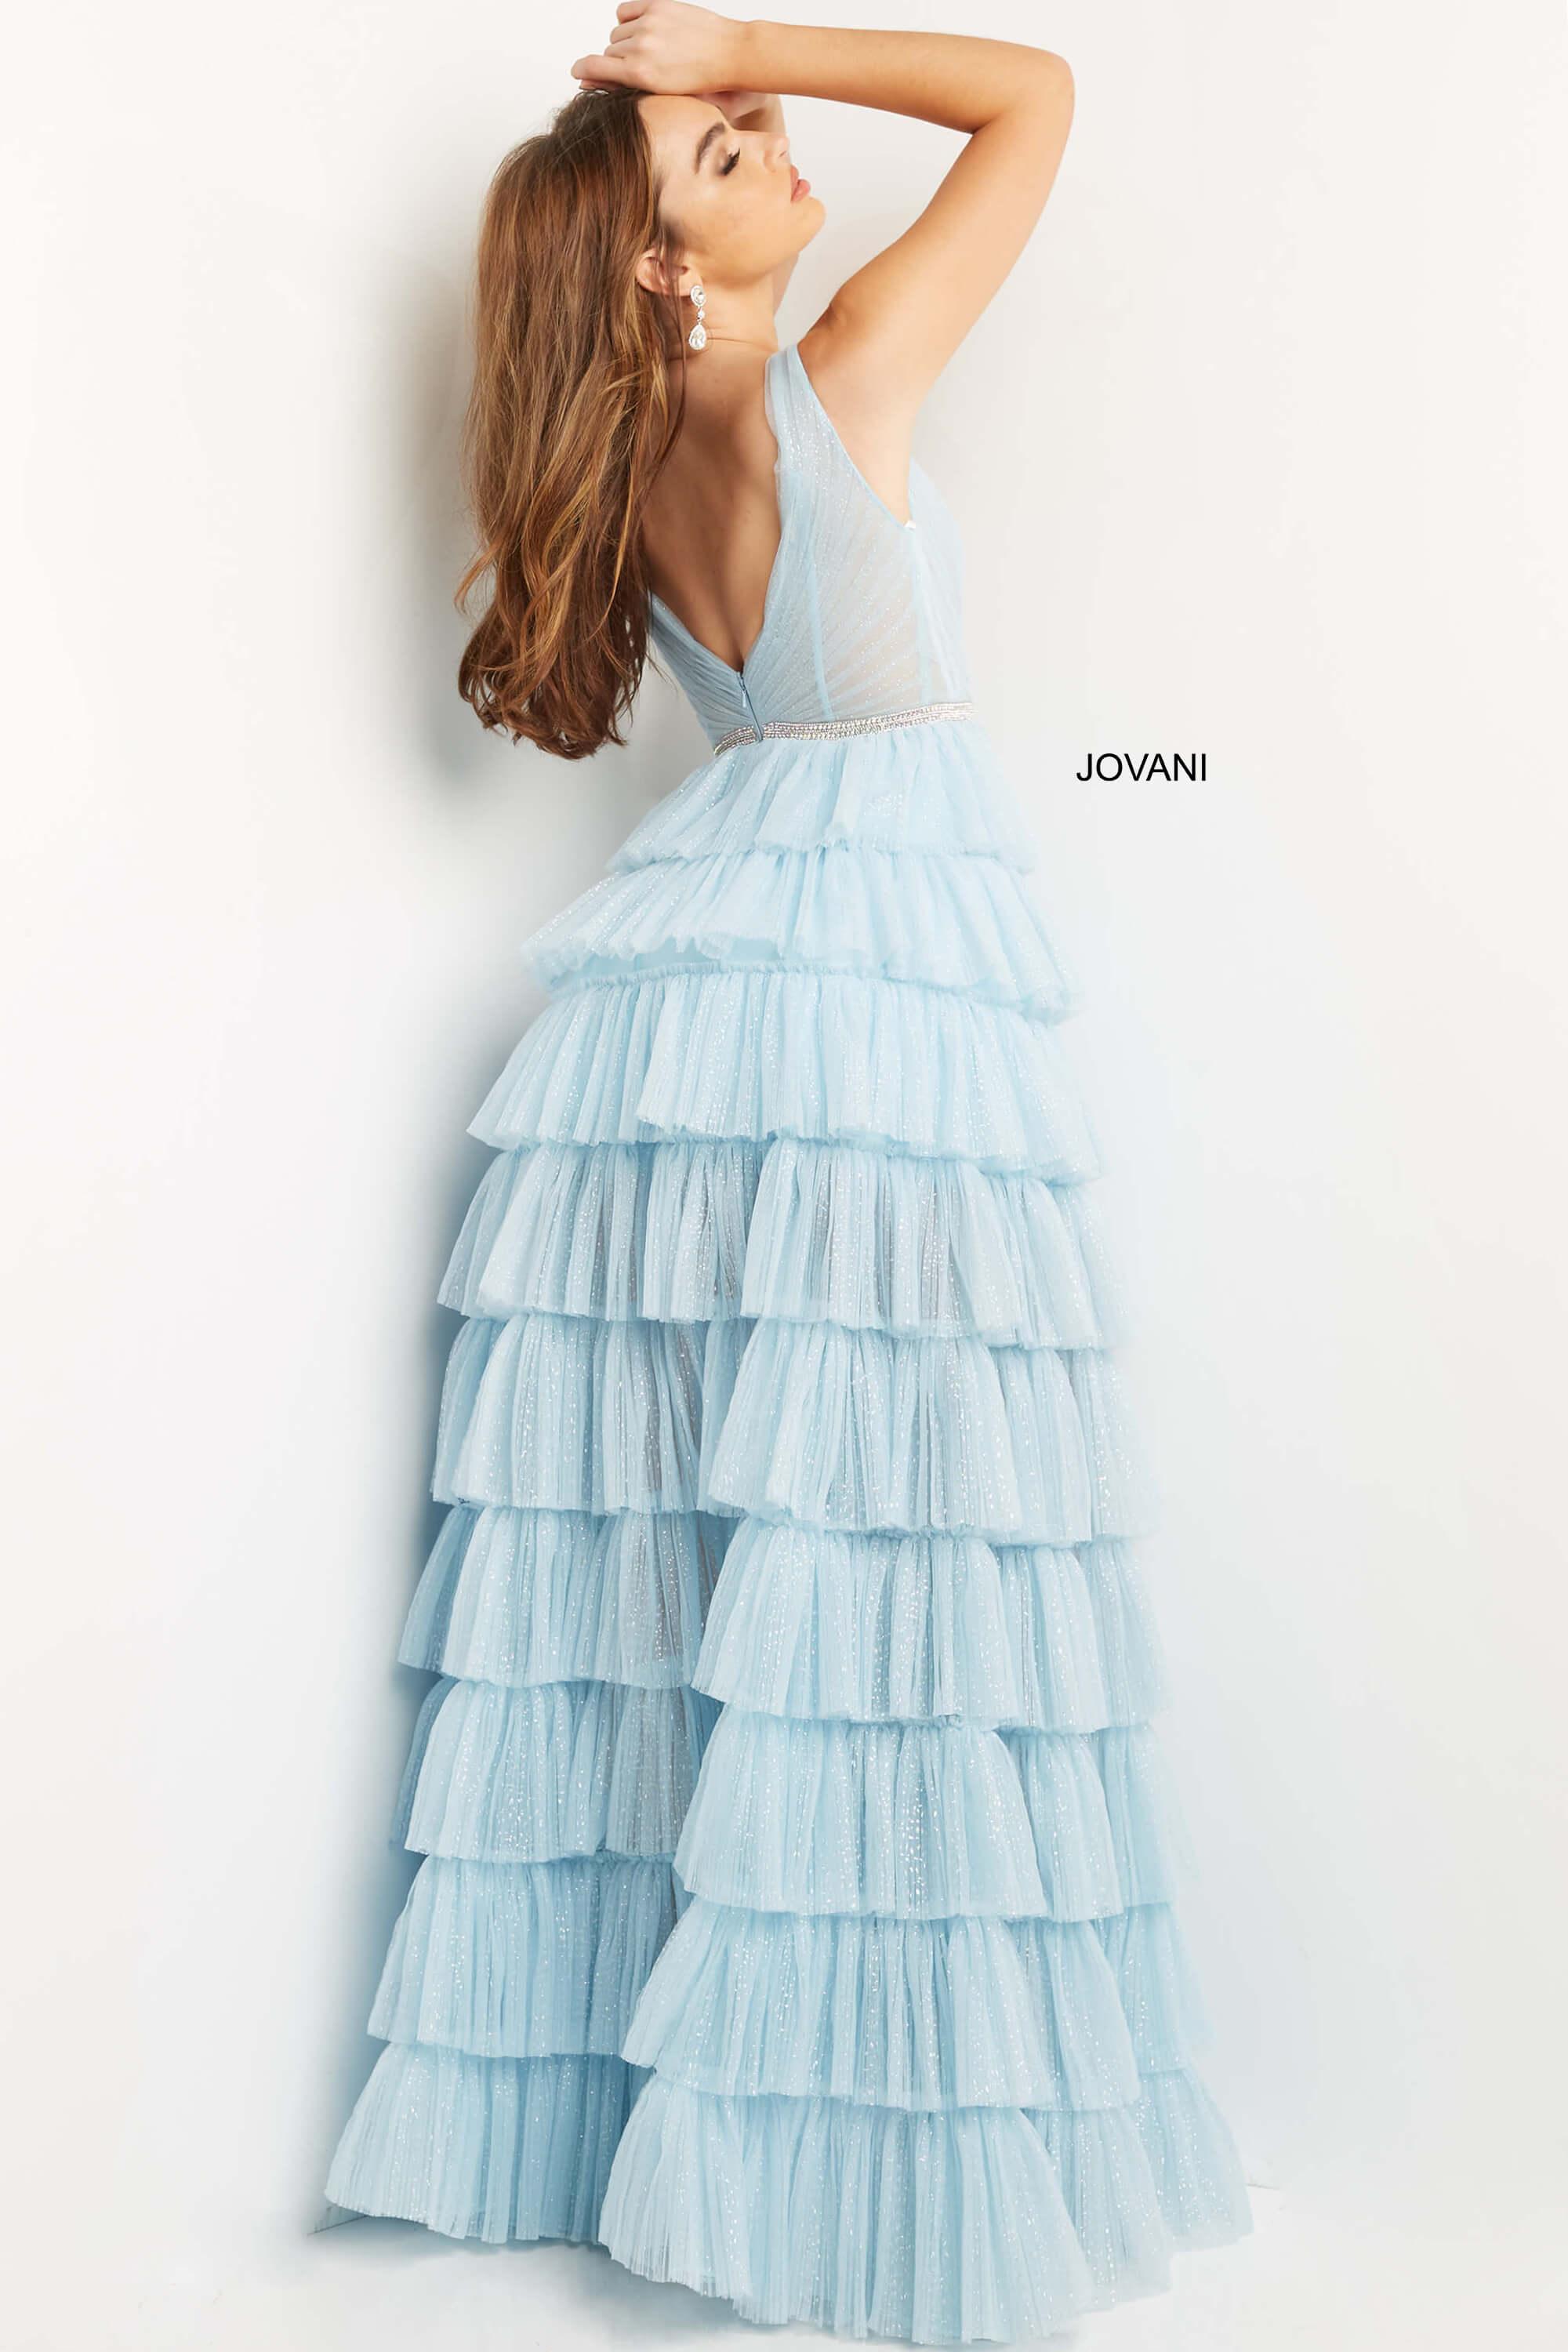 Jovani Sleeveless Long Prom Dress 07998 - The Dress Outlet